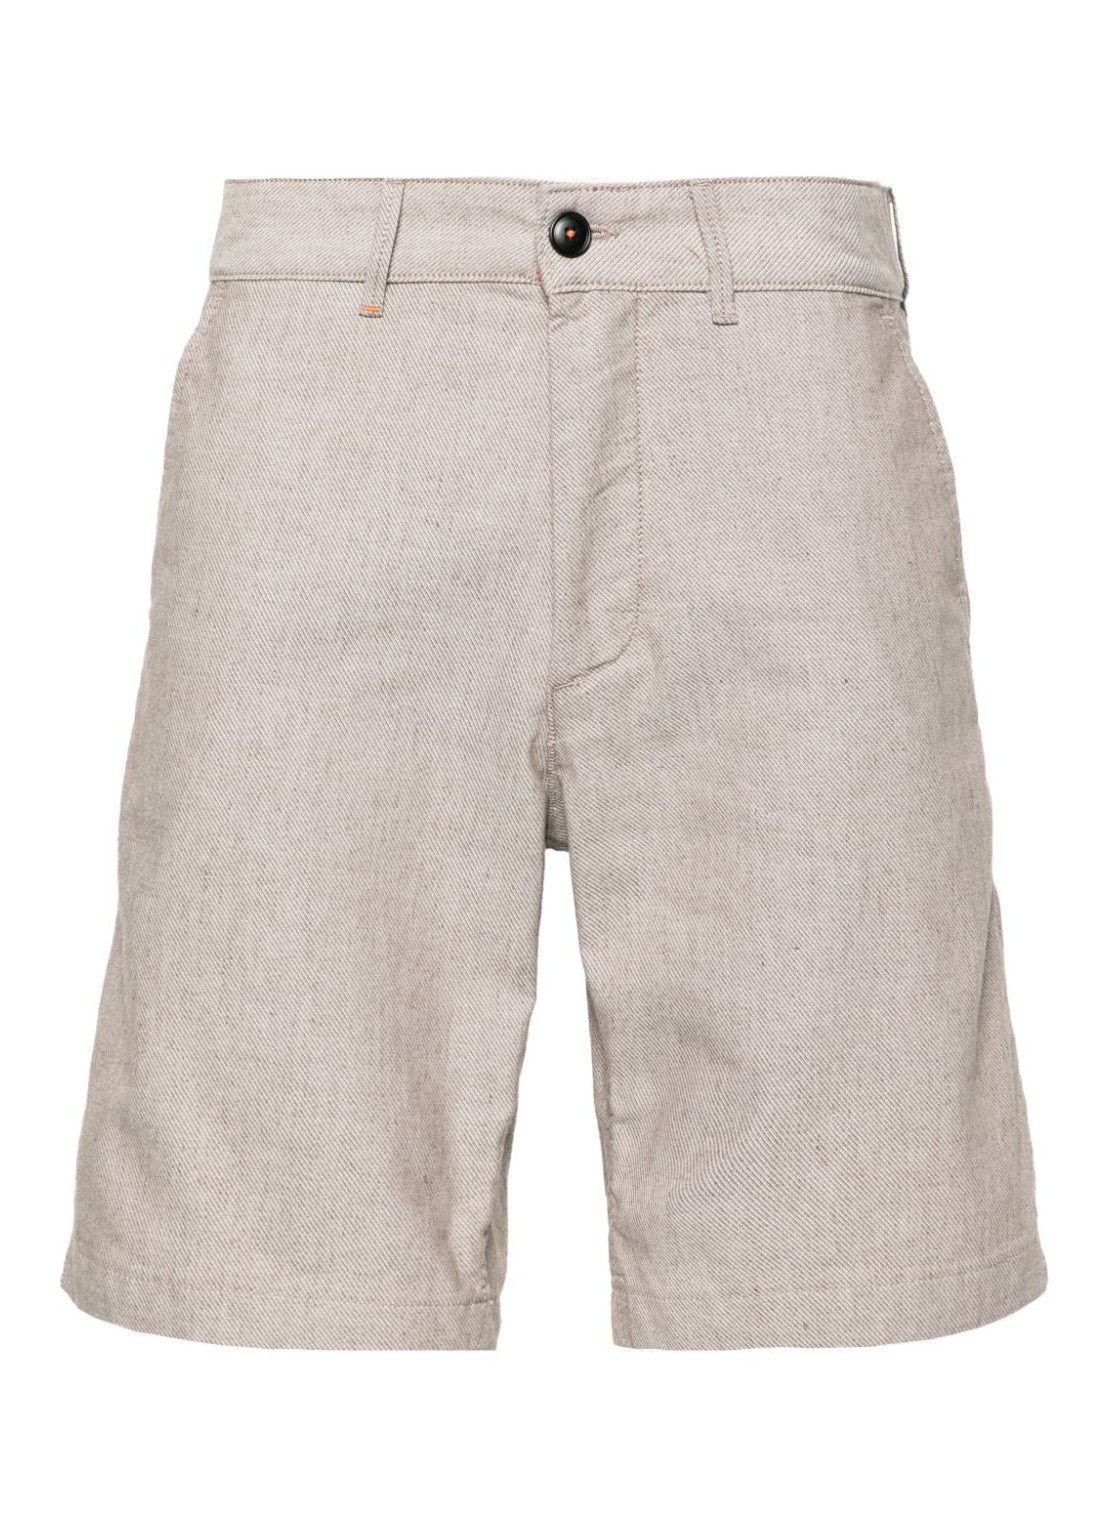 Pantalon corto boss short pant manchino-slim-shorts - 50513017 246 talla 36
 